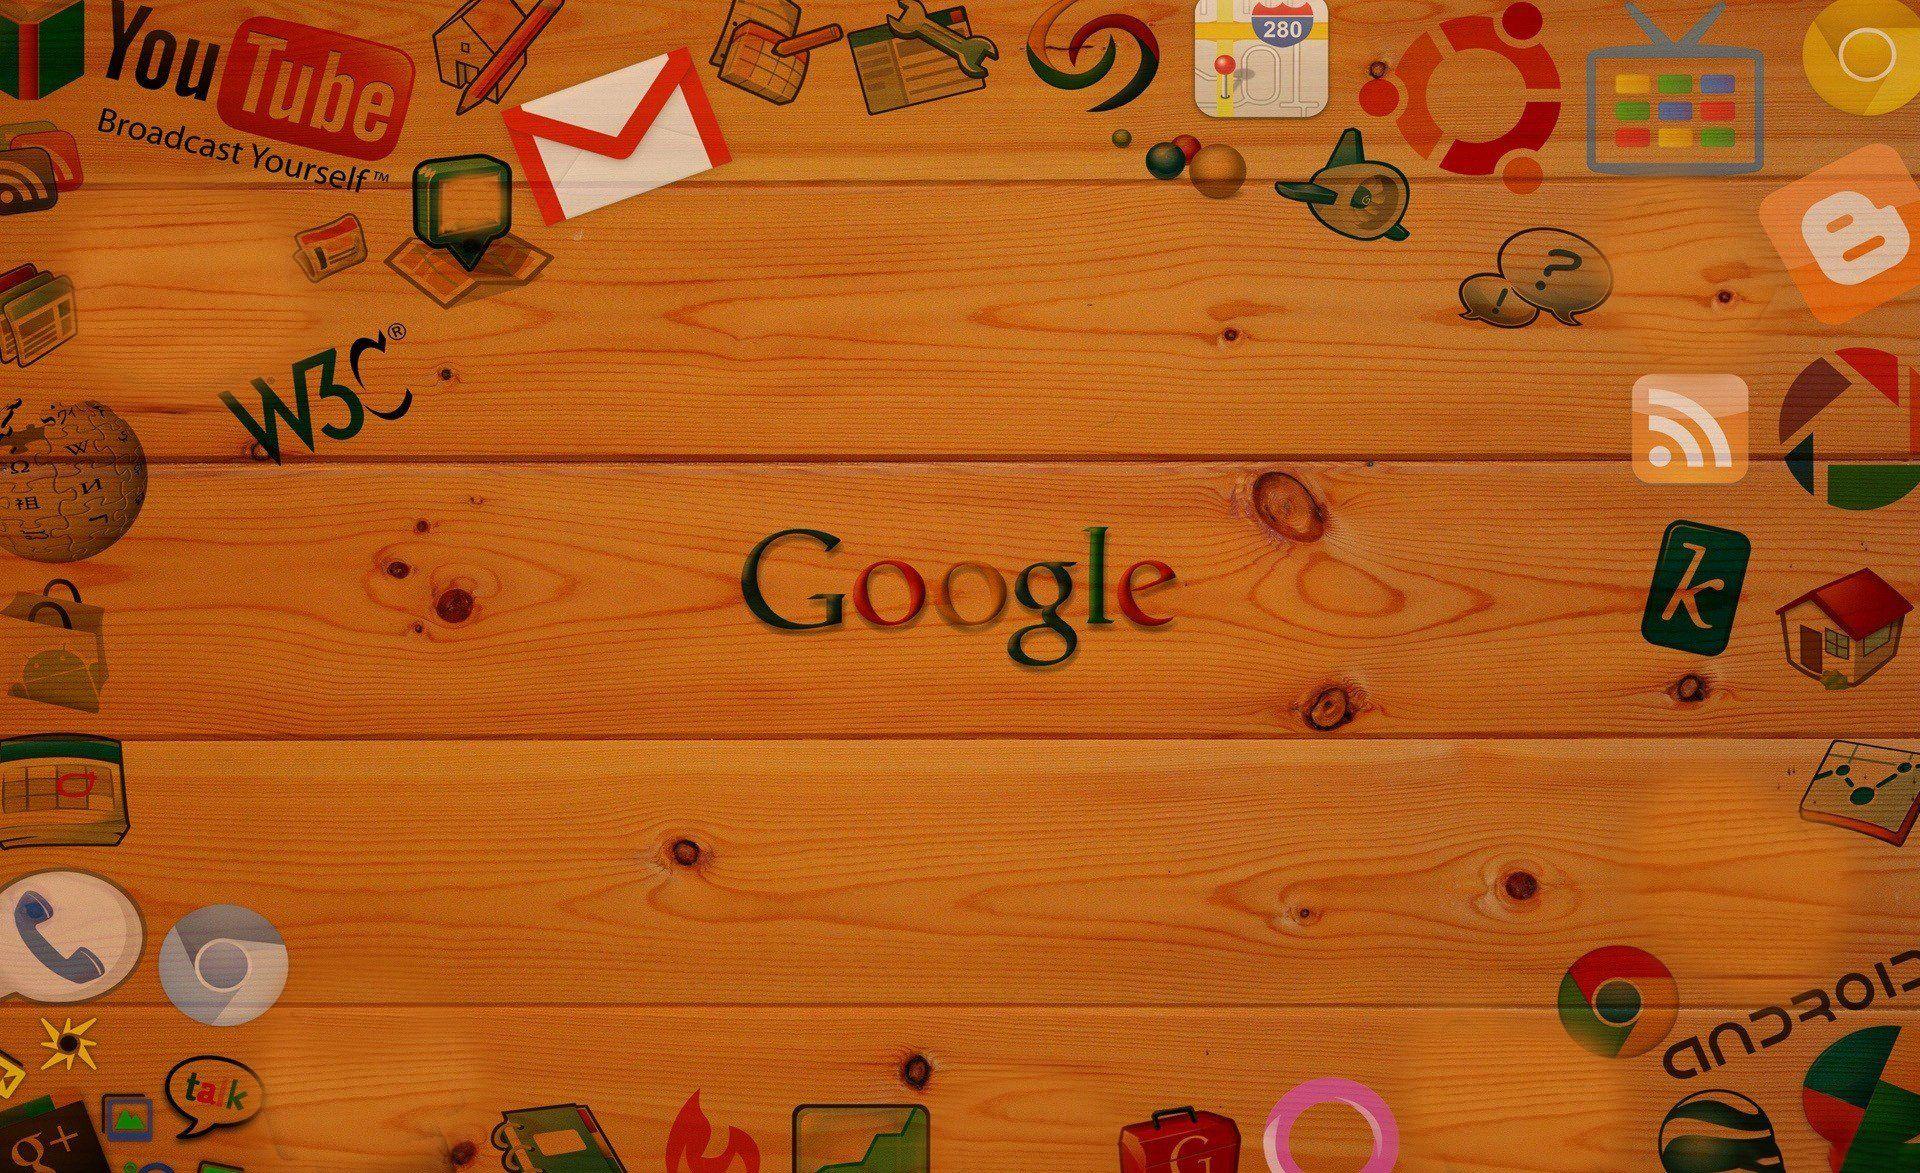 Google Desktop Backgrounds Wallpaper Cave HD Wallpapers Download Free Images Wallpaper [wallpaper981.blogspot.com]